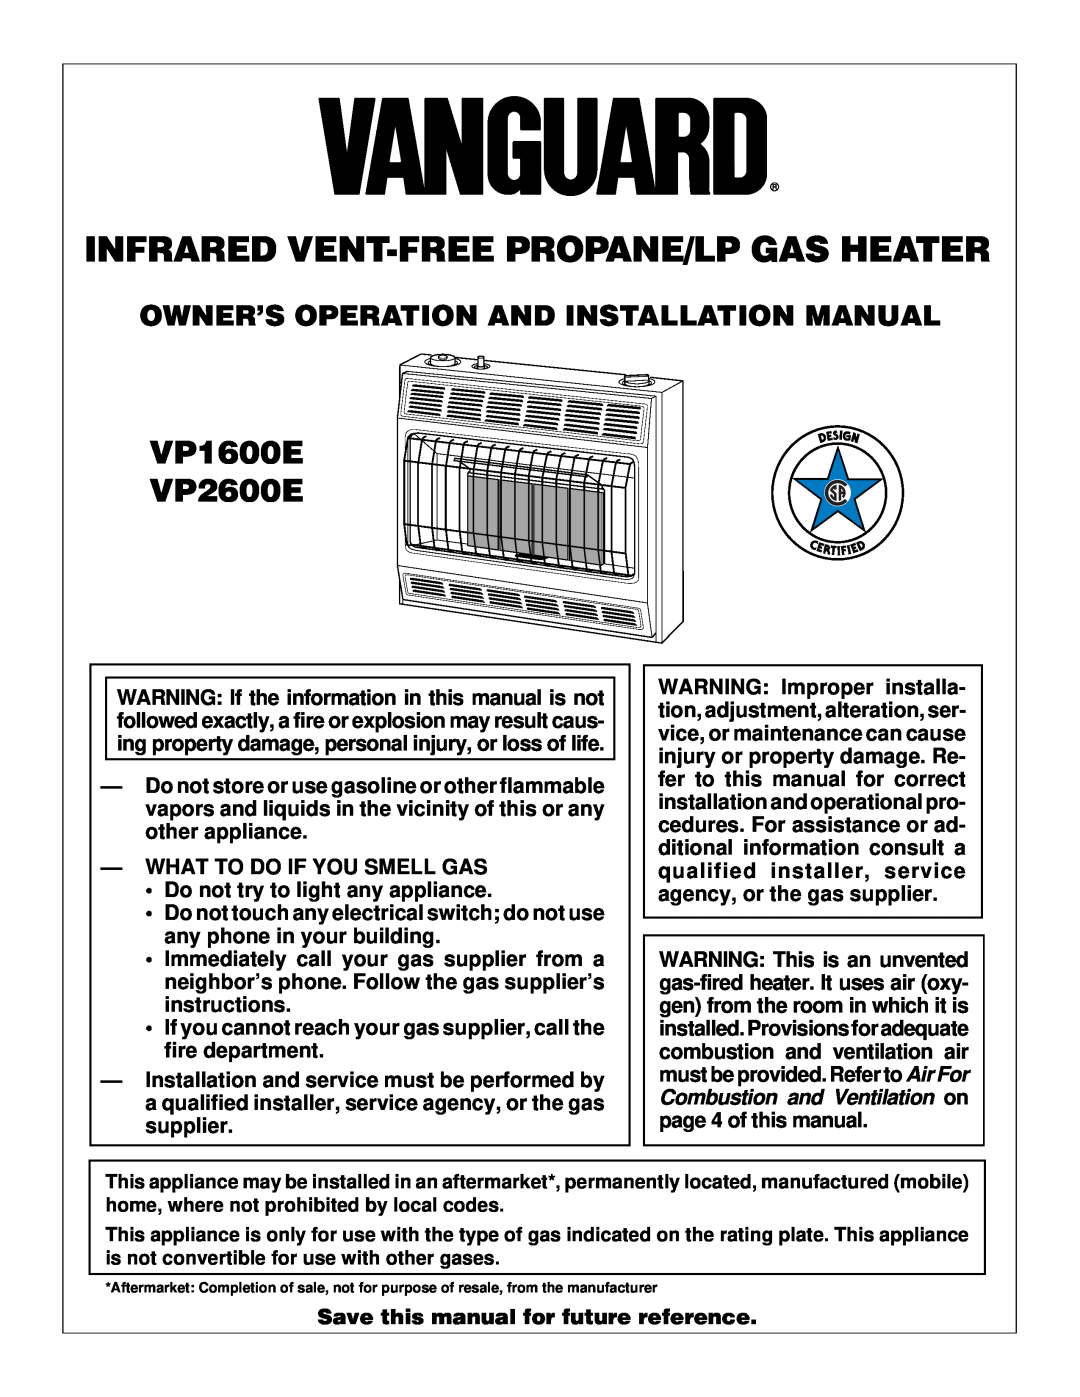 Desa installation manual Infrared Vent-Freepropane/Lp Gas Heater, VP1600E VP2600E 